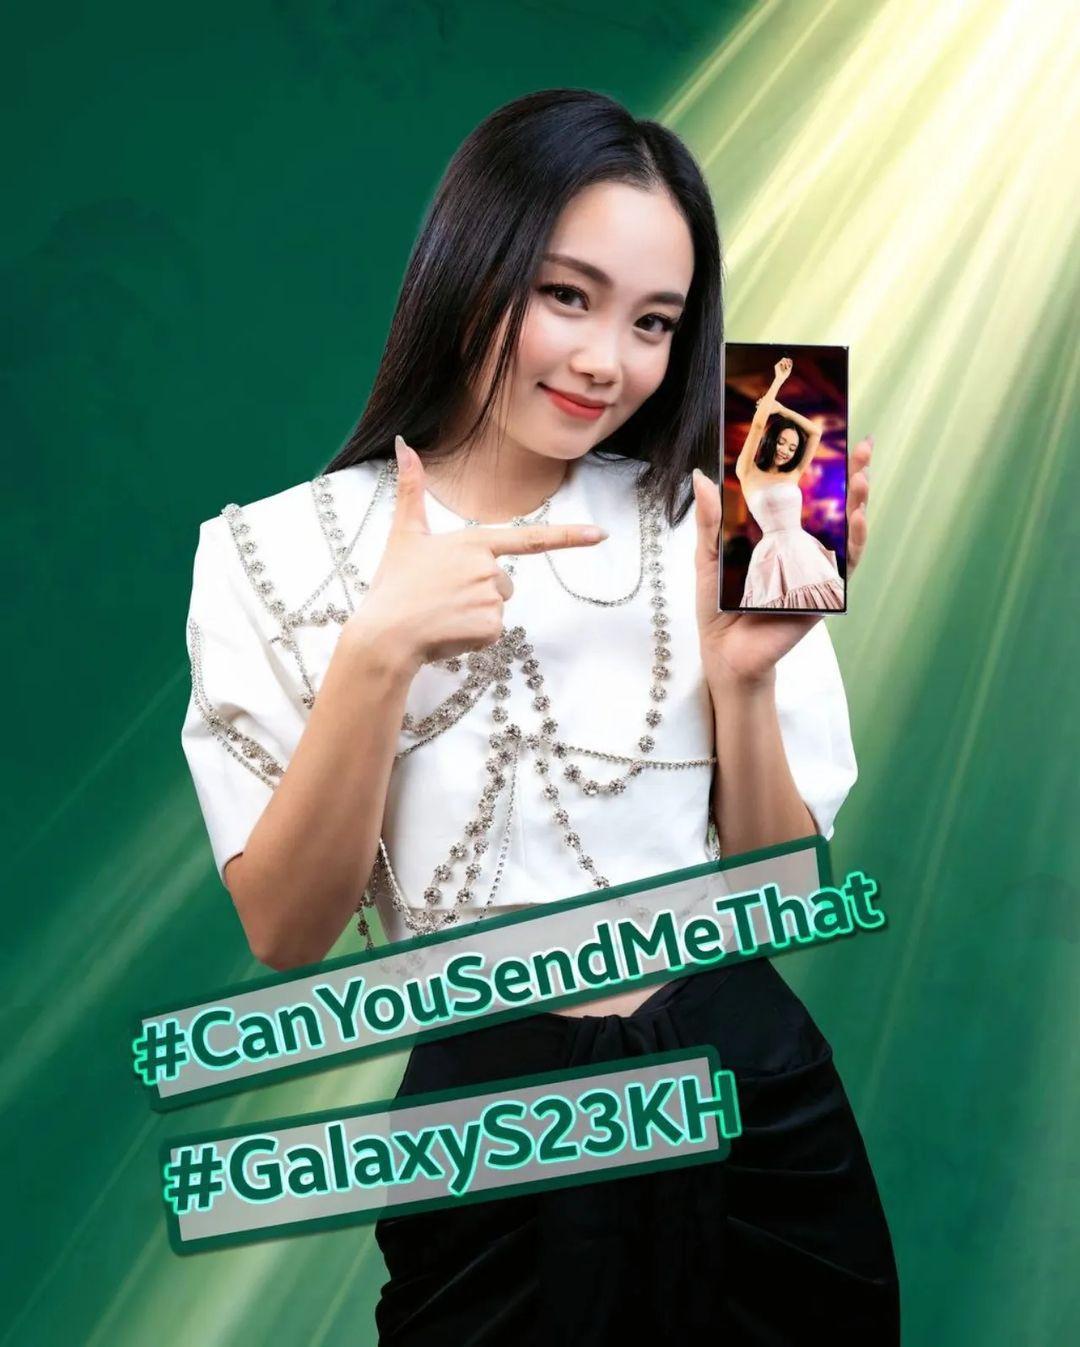 class="content__text"
 ផ្តិតយករូបភាពដ៏អស្ចារ្យគ្រប់ទីកន្លែង និងគ្រប់ពេលវេលាសូម្បីតែក្រោមស្ថានភាពខ្សោយពន្លឺ ជាមួយ Galaxy S23 ! រួចហើយ បាញ់រូបអោយគ្នាផង! 😀
 #CanYouSendMeThat #GalaxyS23KH
@samsungcambodia 
 